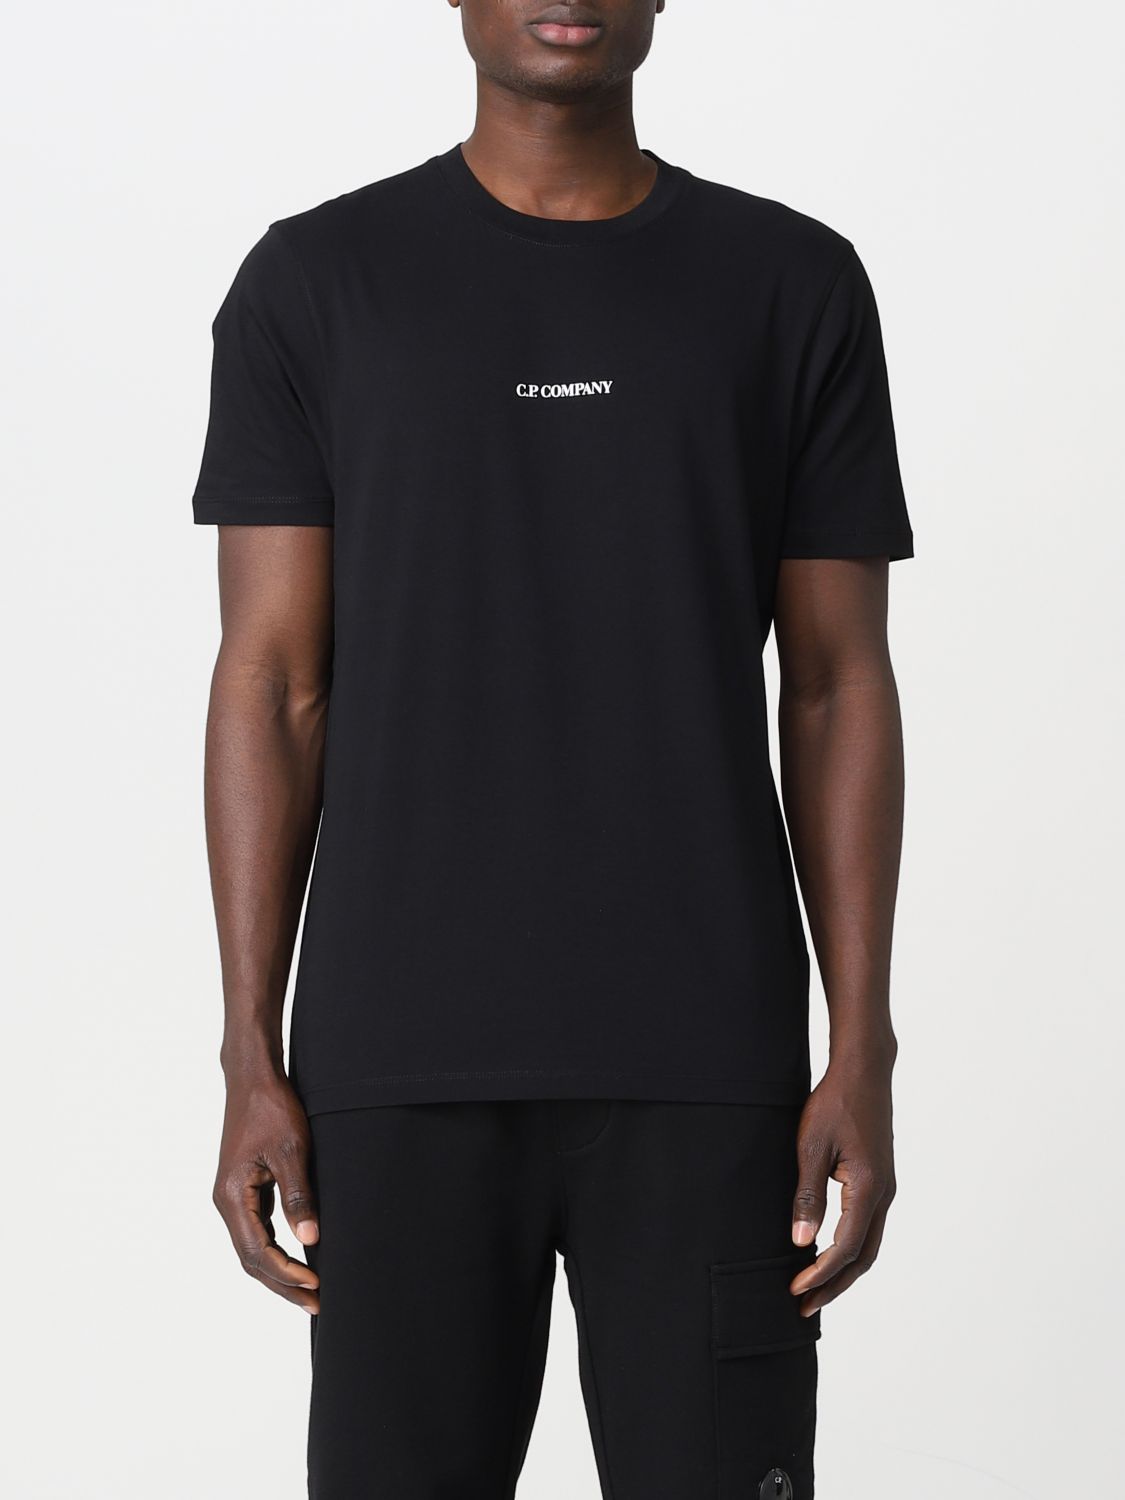 C.P. COMPANY: t-shirt for man - Black | C.p. Company t-shirt ...